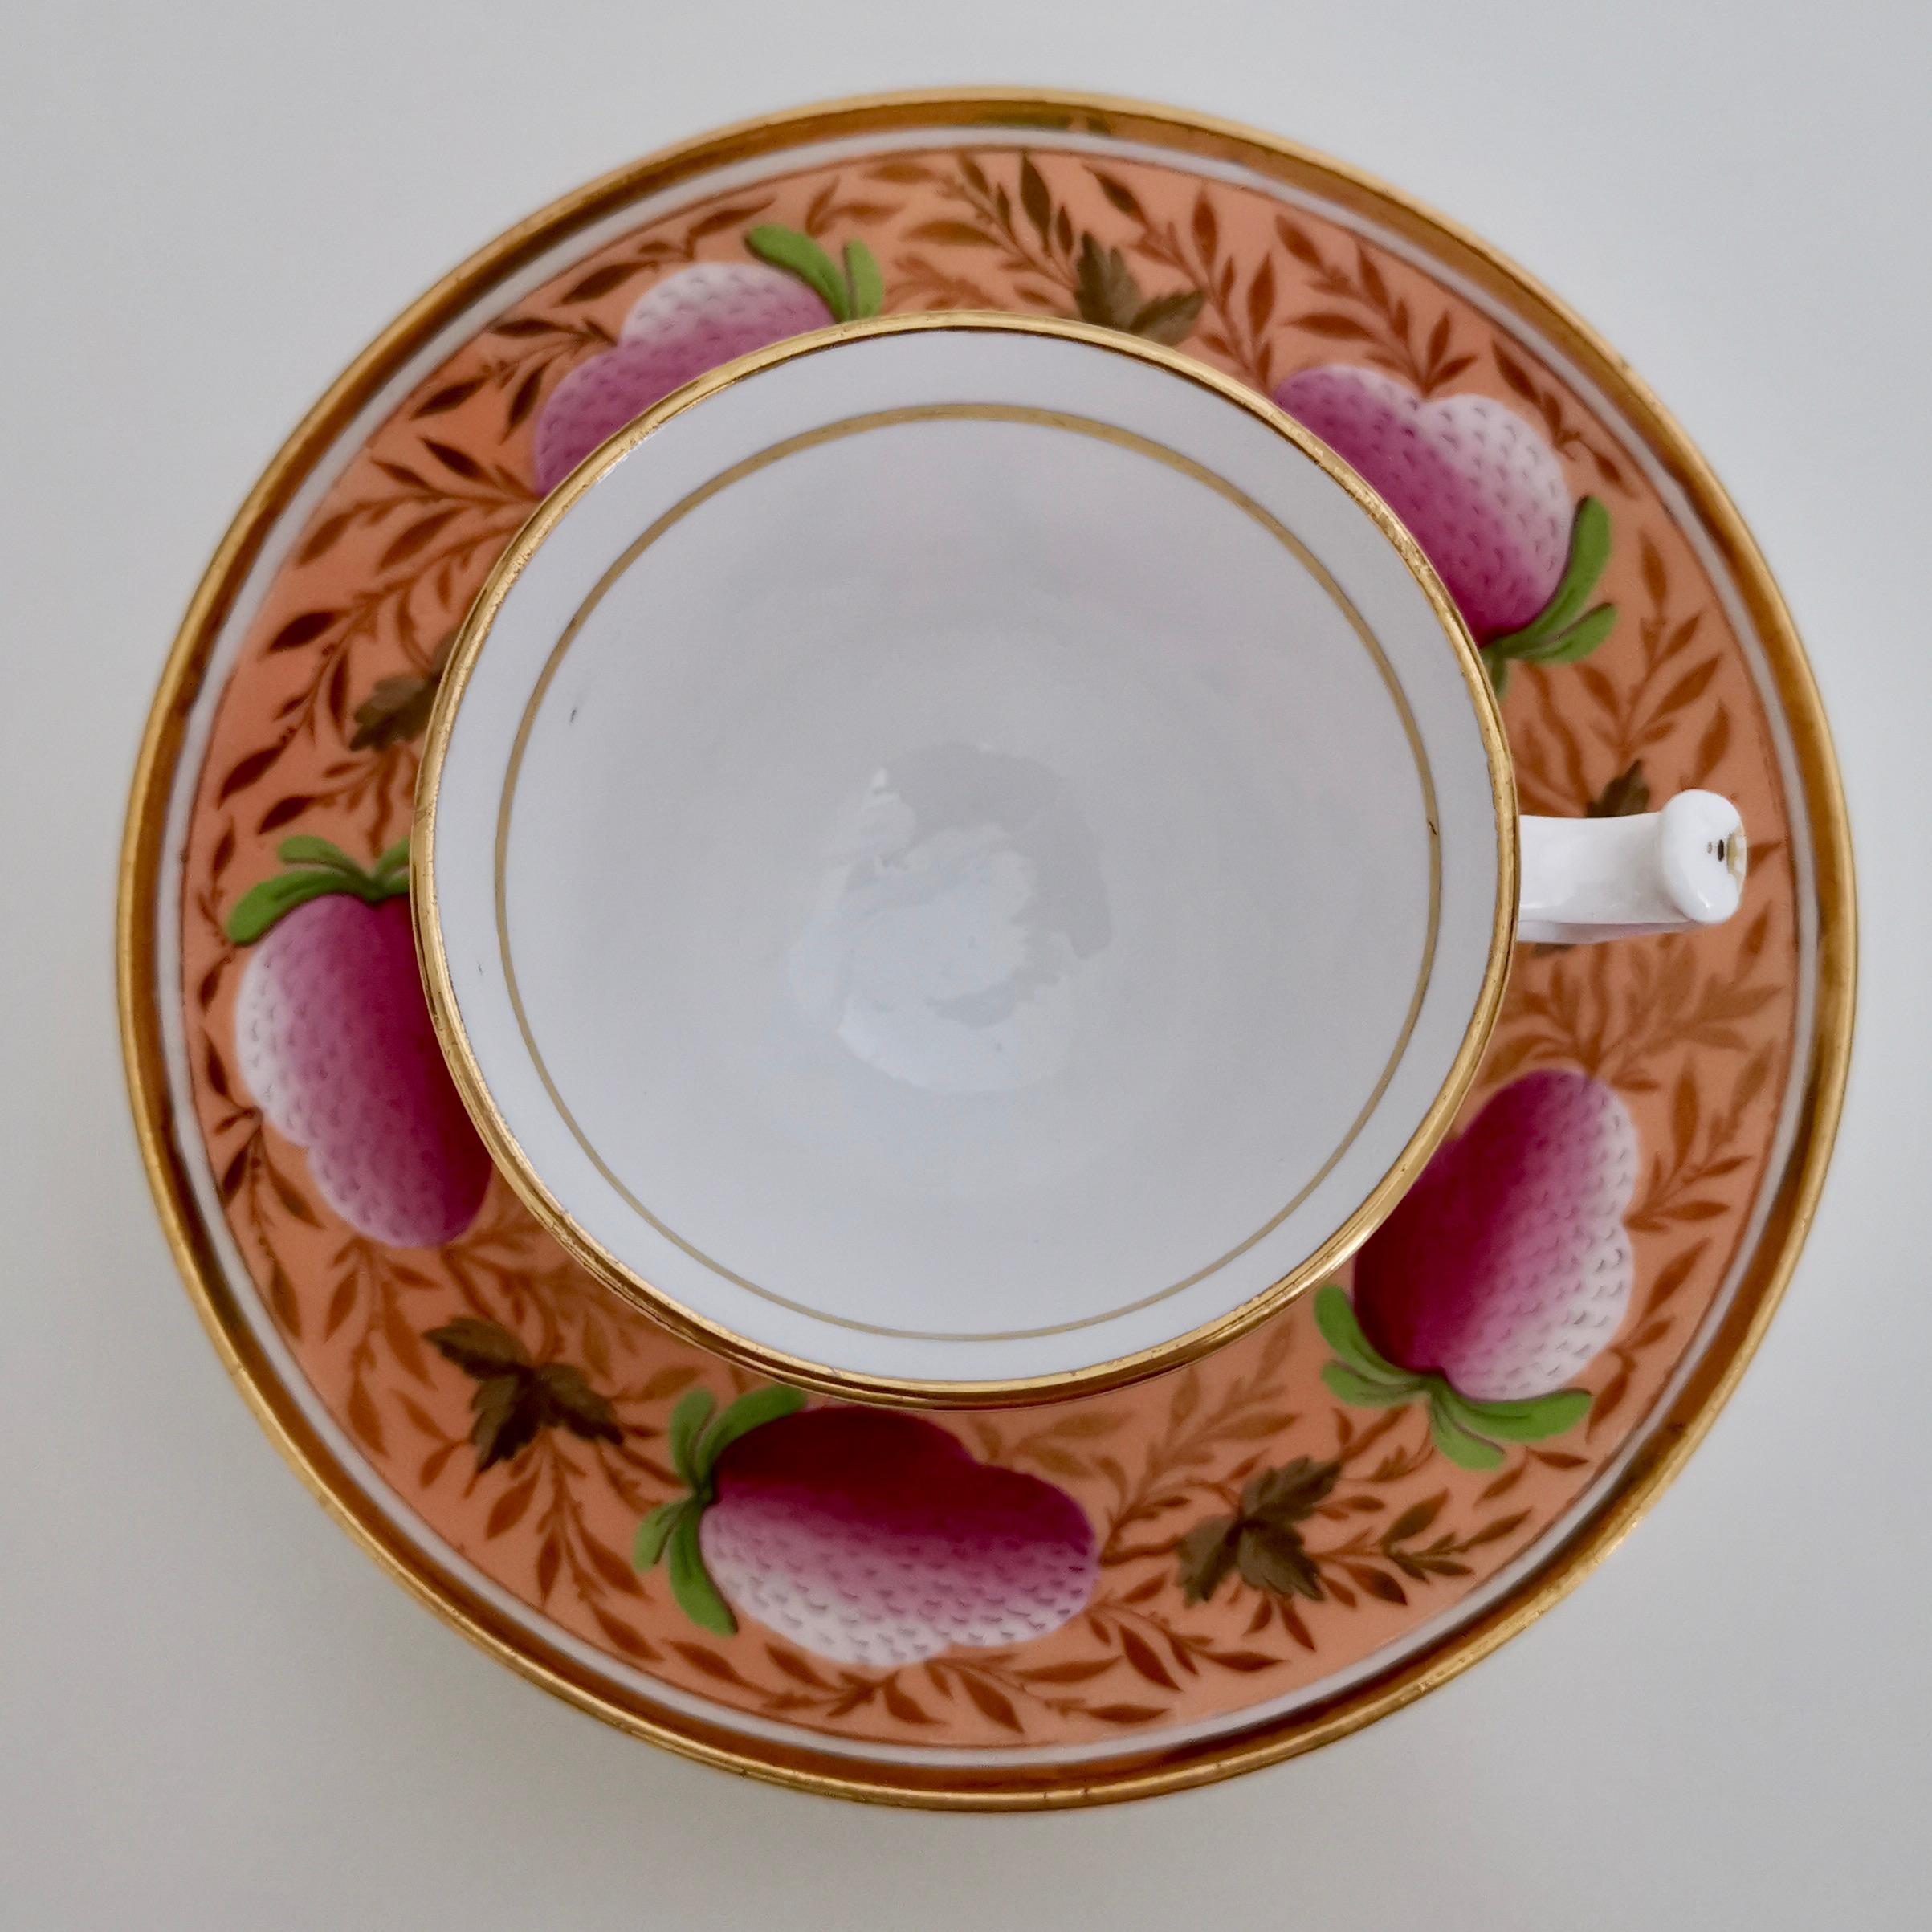 John Rose Coalport Porcelain Teacup Trio, Pink Strawberries, Regency, circa 1815 1